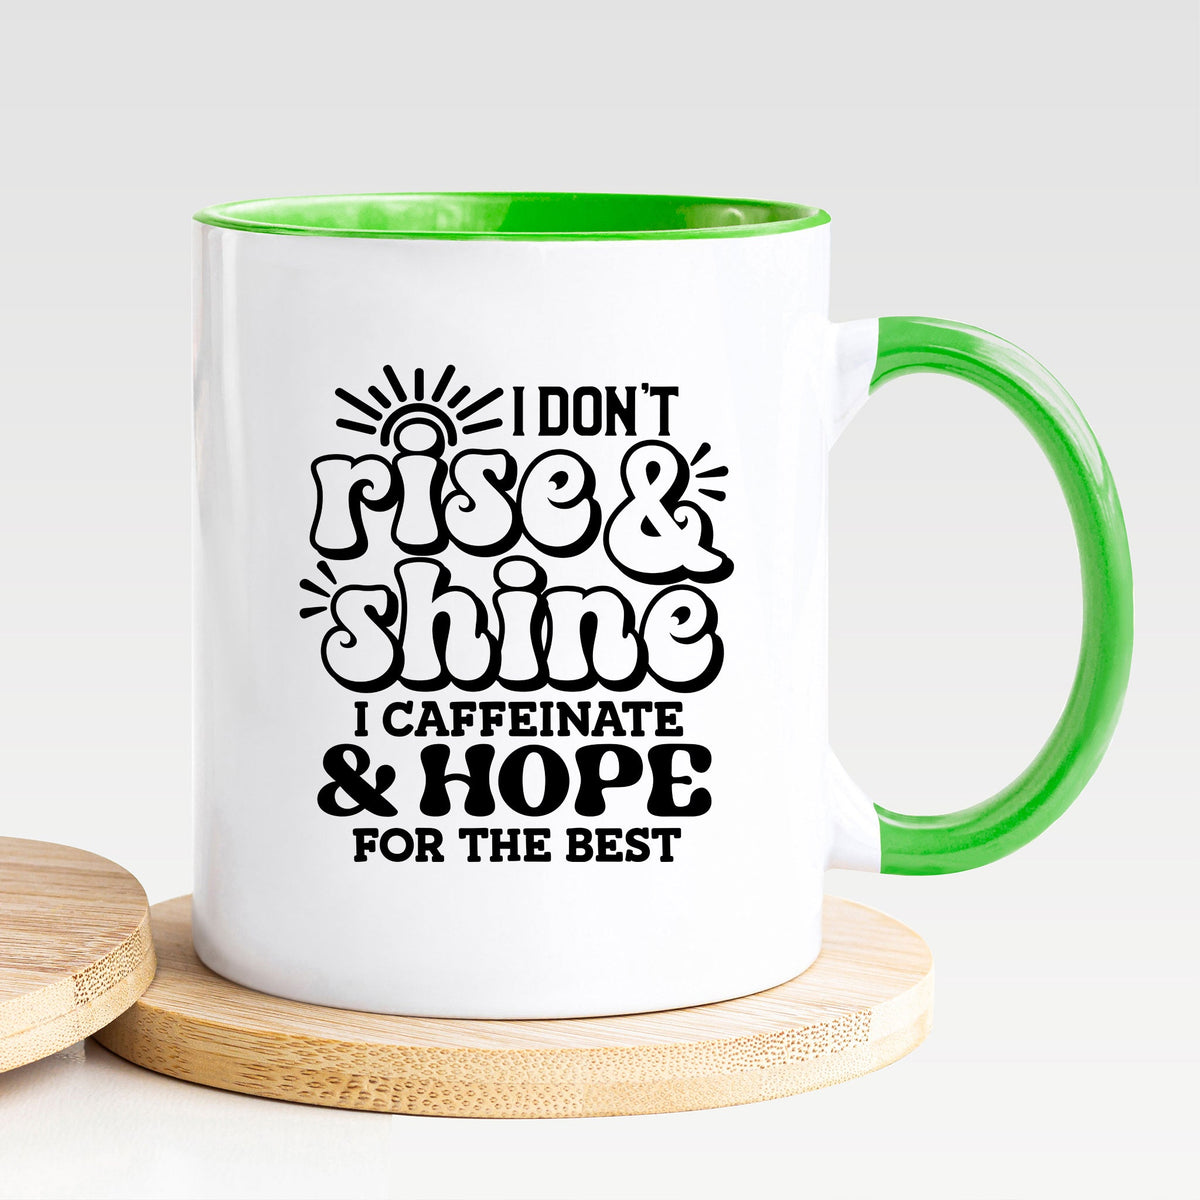 I Don't Rise & Shine I Caffeinate & Hope For The Best - Mug